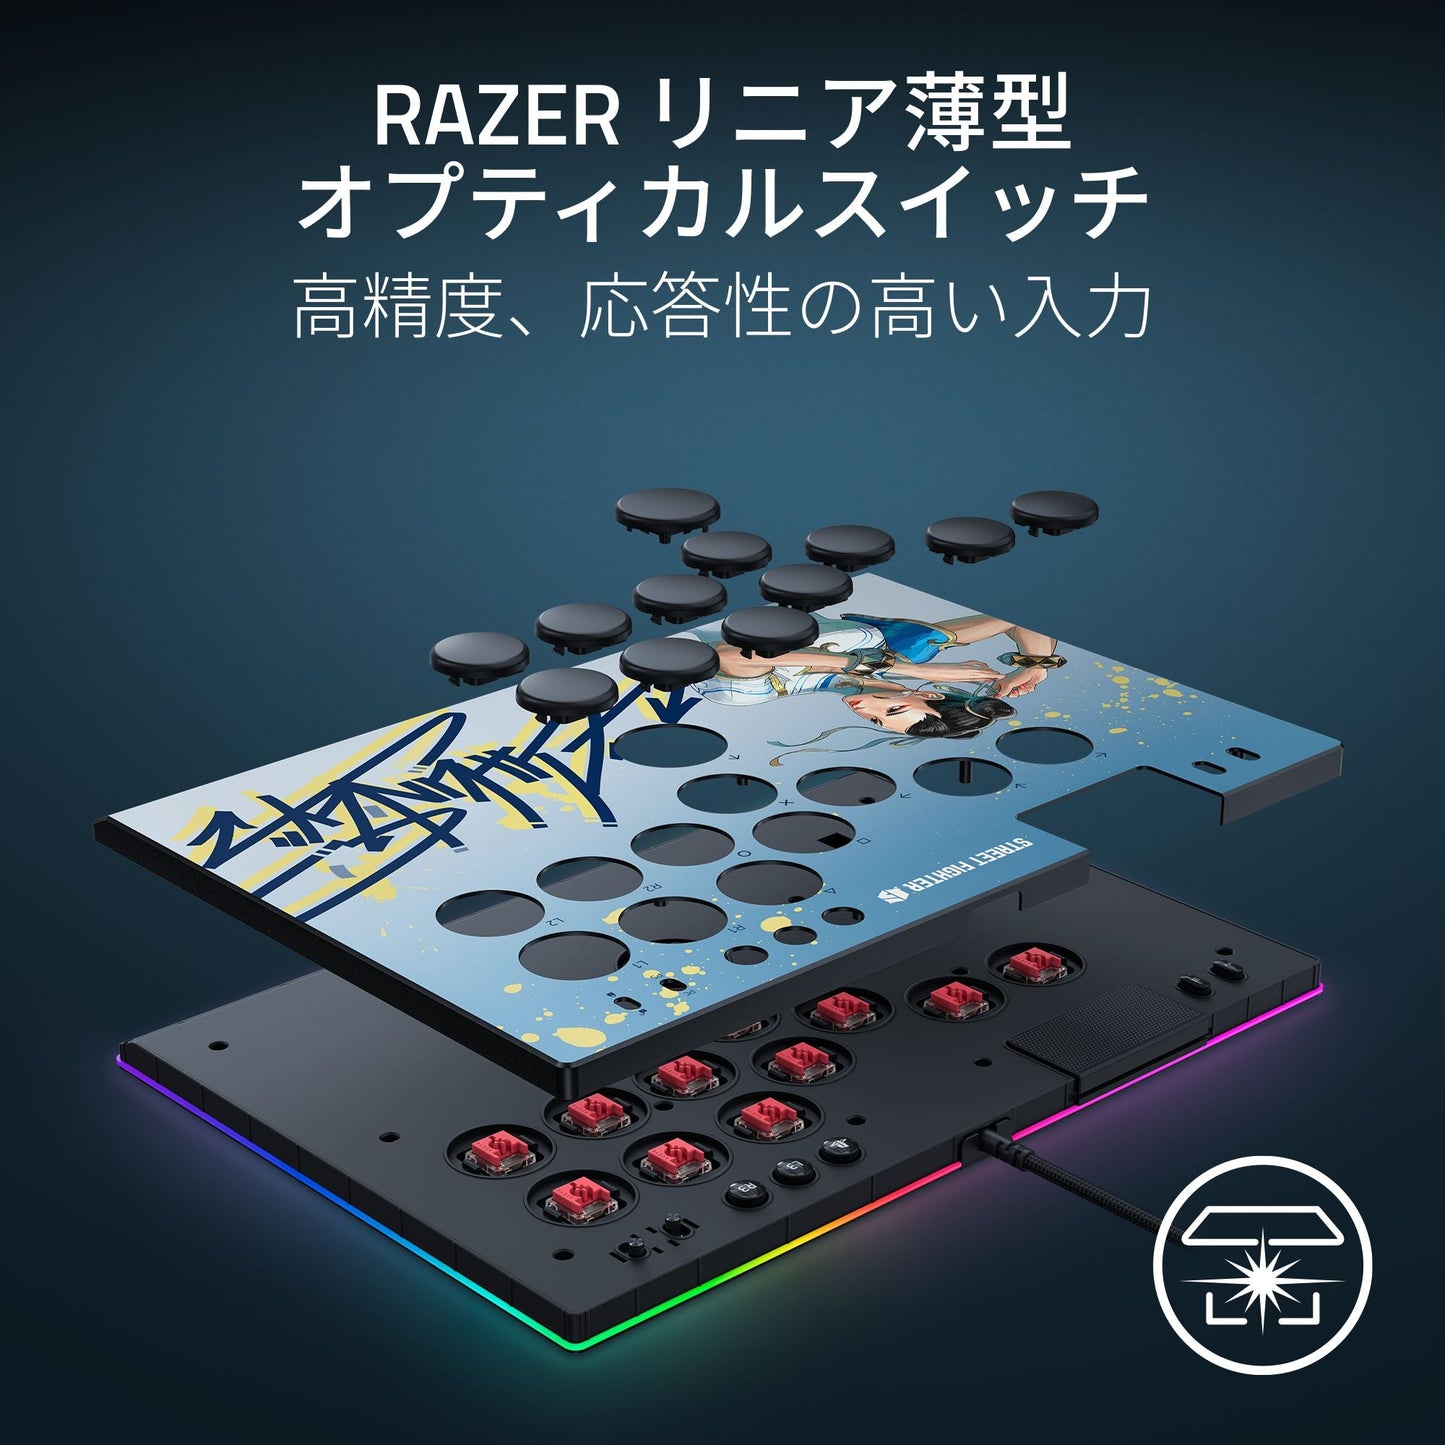 Razer Kitsune SF6 Chun-Li Edition レイザー キツネ SF6 春麗 チュンリー エディション